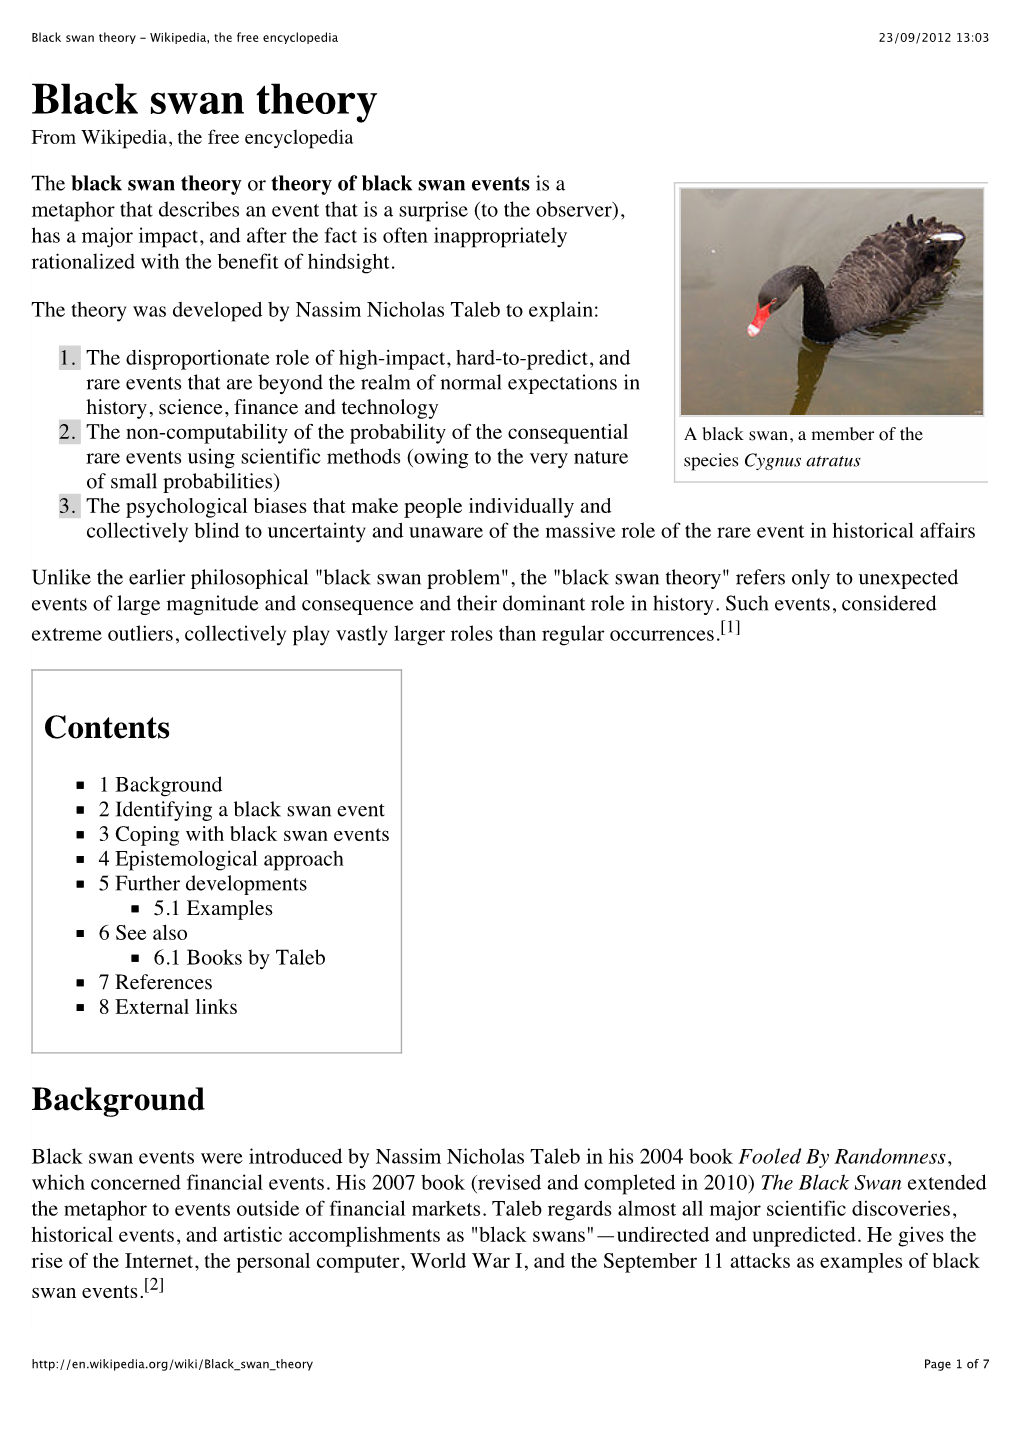 Black Swan Theory - Wikipedia, the Free Encyclopedia 23/09/2012 13:03 Black Swan Theory from Wikipedia, the Free Encyclopedia